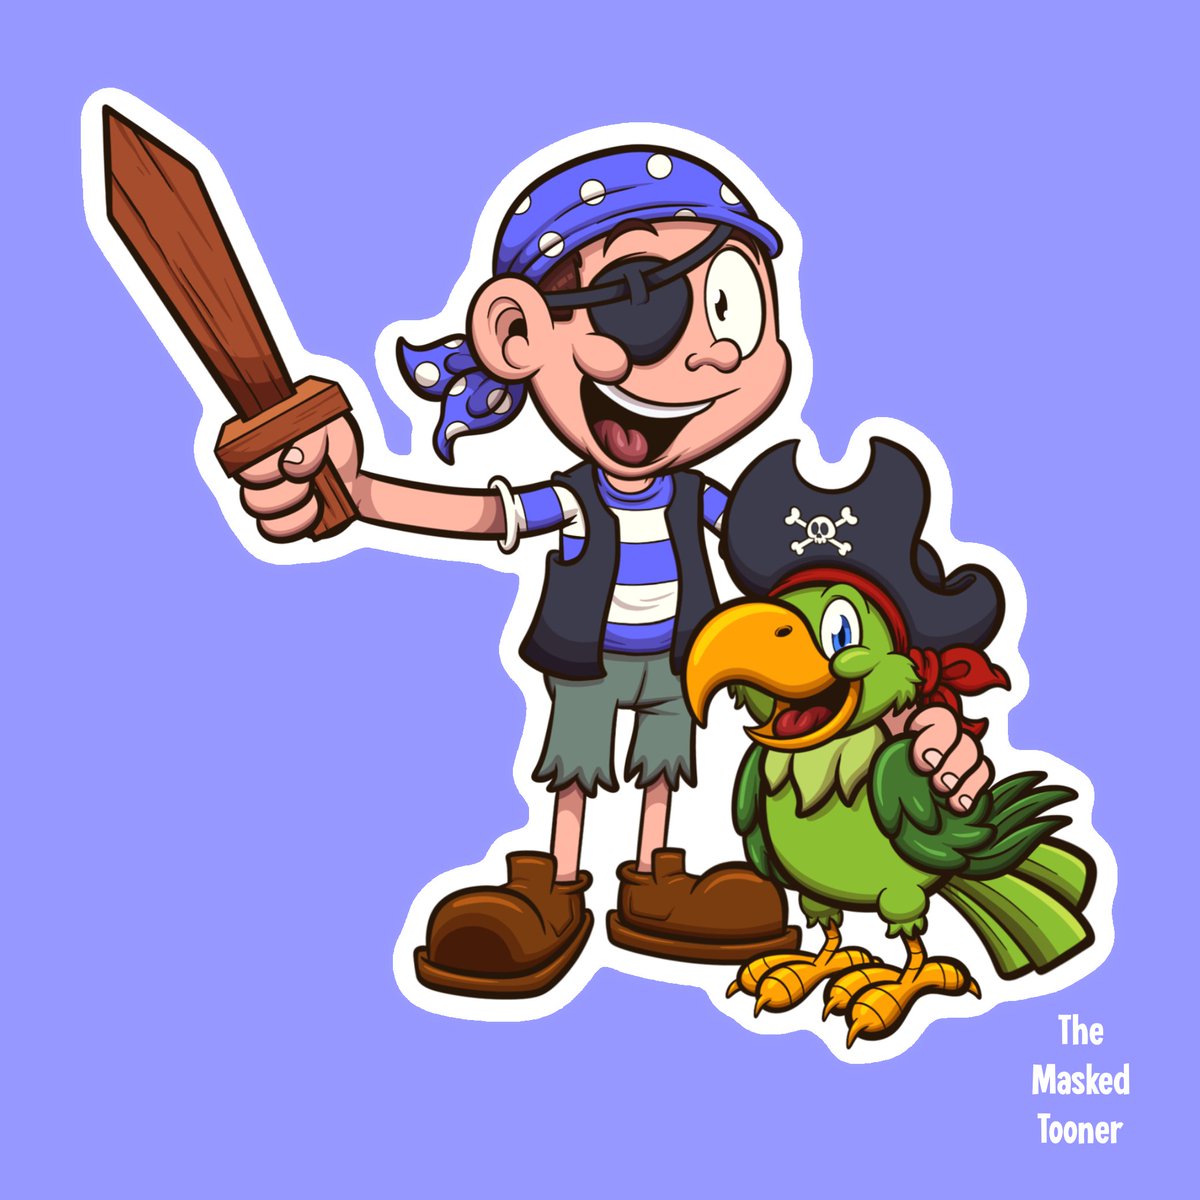 Pirate boy with parrot ☠️🧒🏻🦜
-
#pirate #arrr #ahoy #pirates #nationaltalklikeapirateday #pirateboy #boy #kid #child #sword #parrot #green #greenparrot #bird #animal #cartoon #themaskedtooner #vector #vectorart #stockphoto #illustration #dutchartist #characterdesign